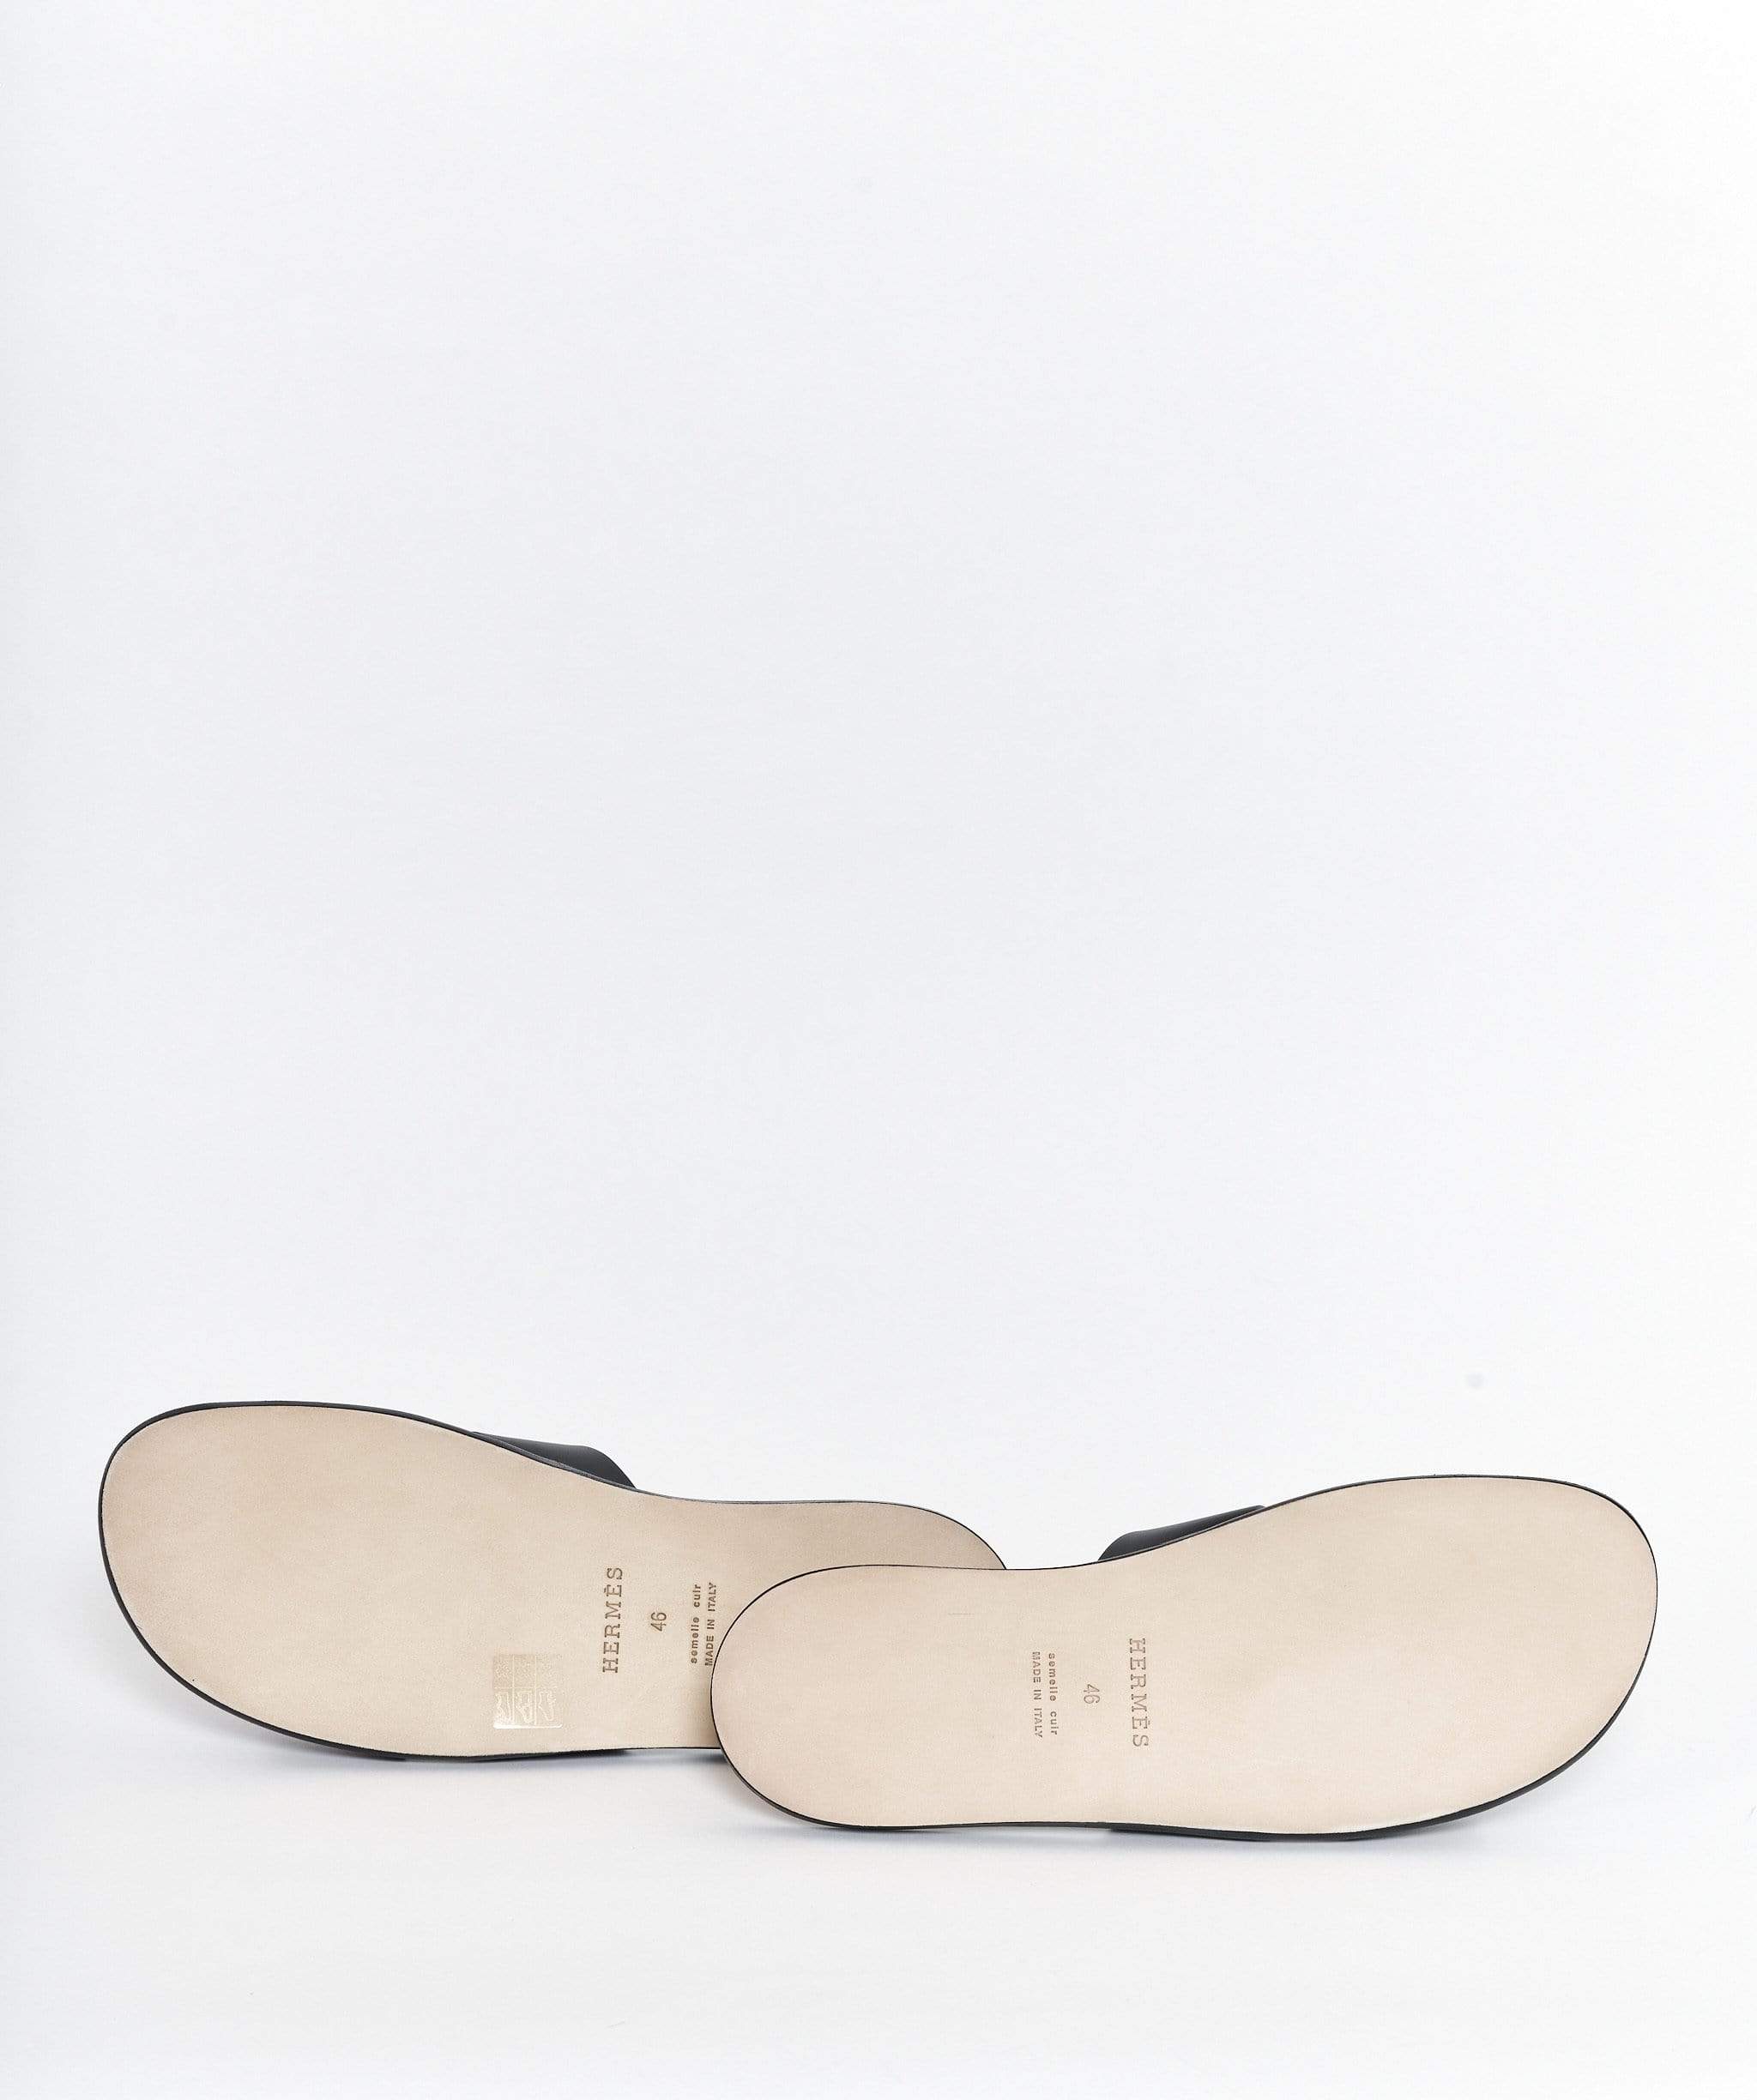 Luxury Promise Hermes Izmir sandals 46